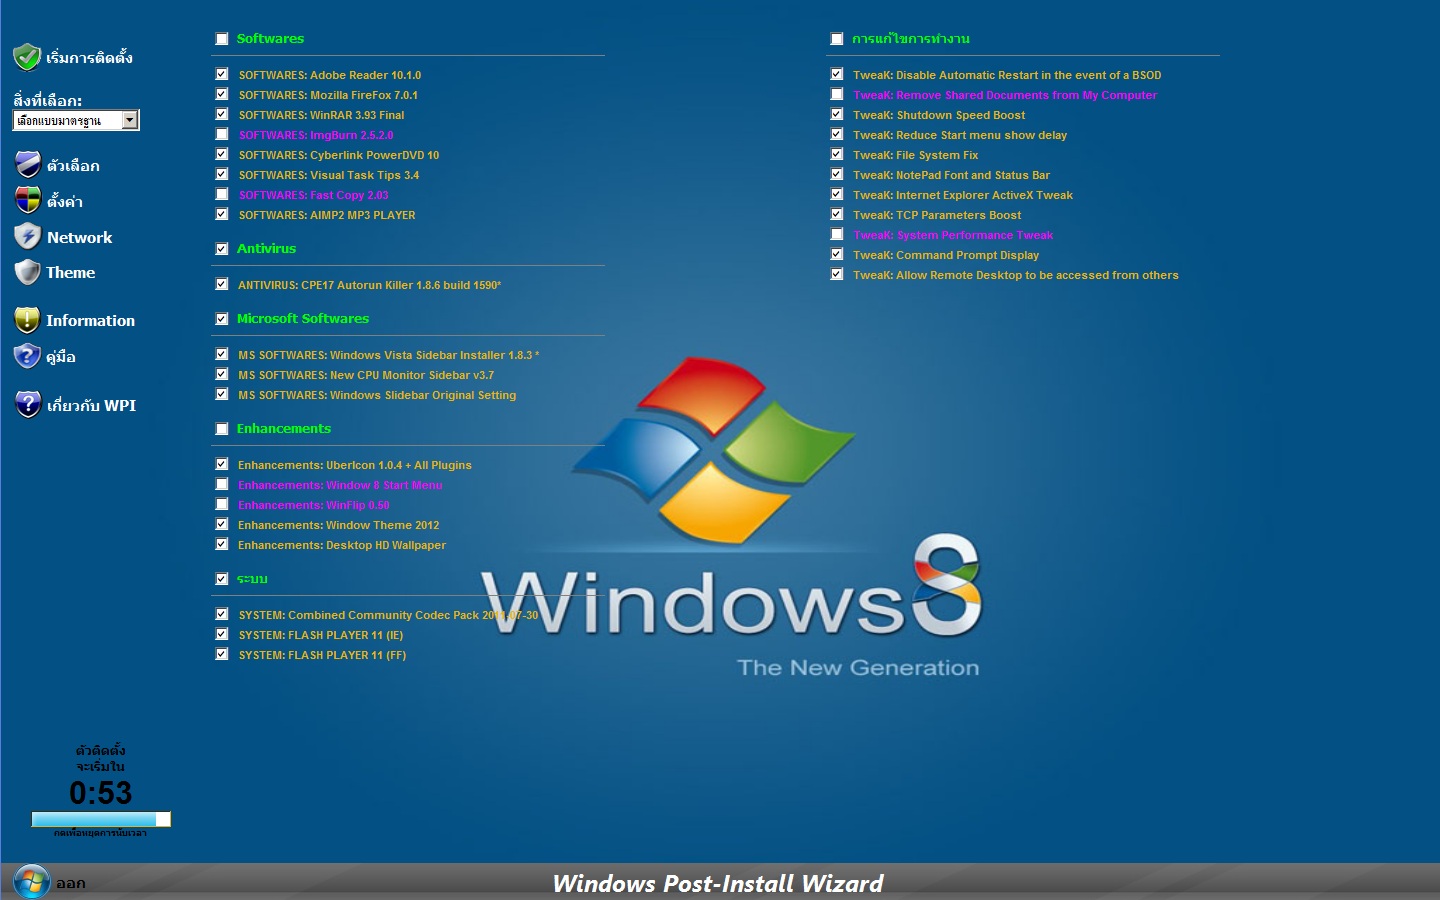 windows 95 emulator virtualbox